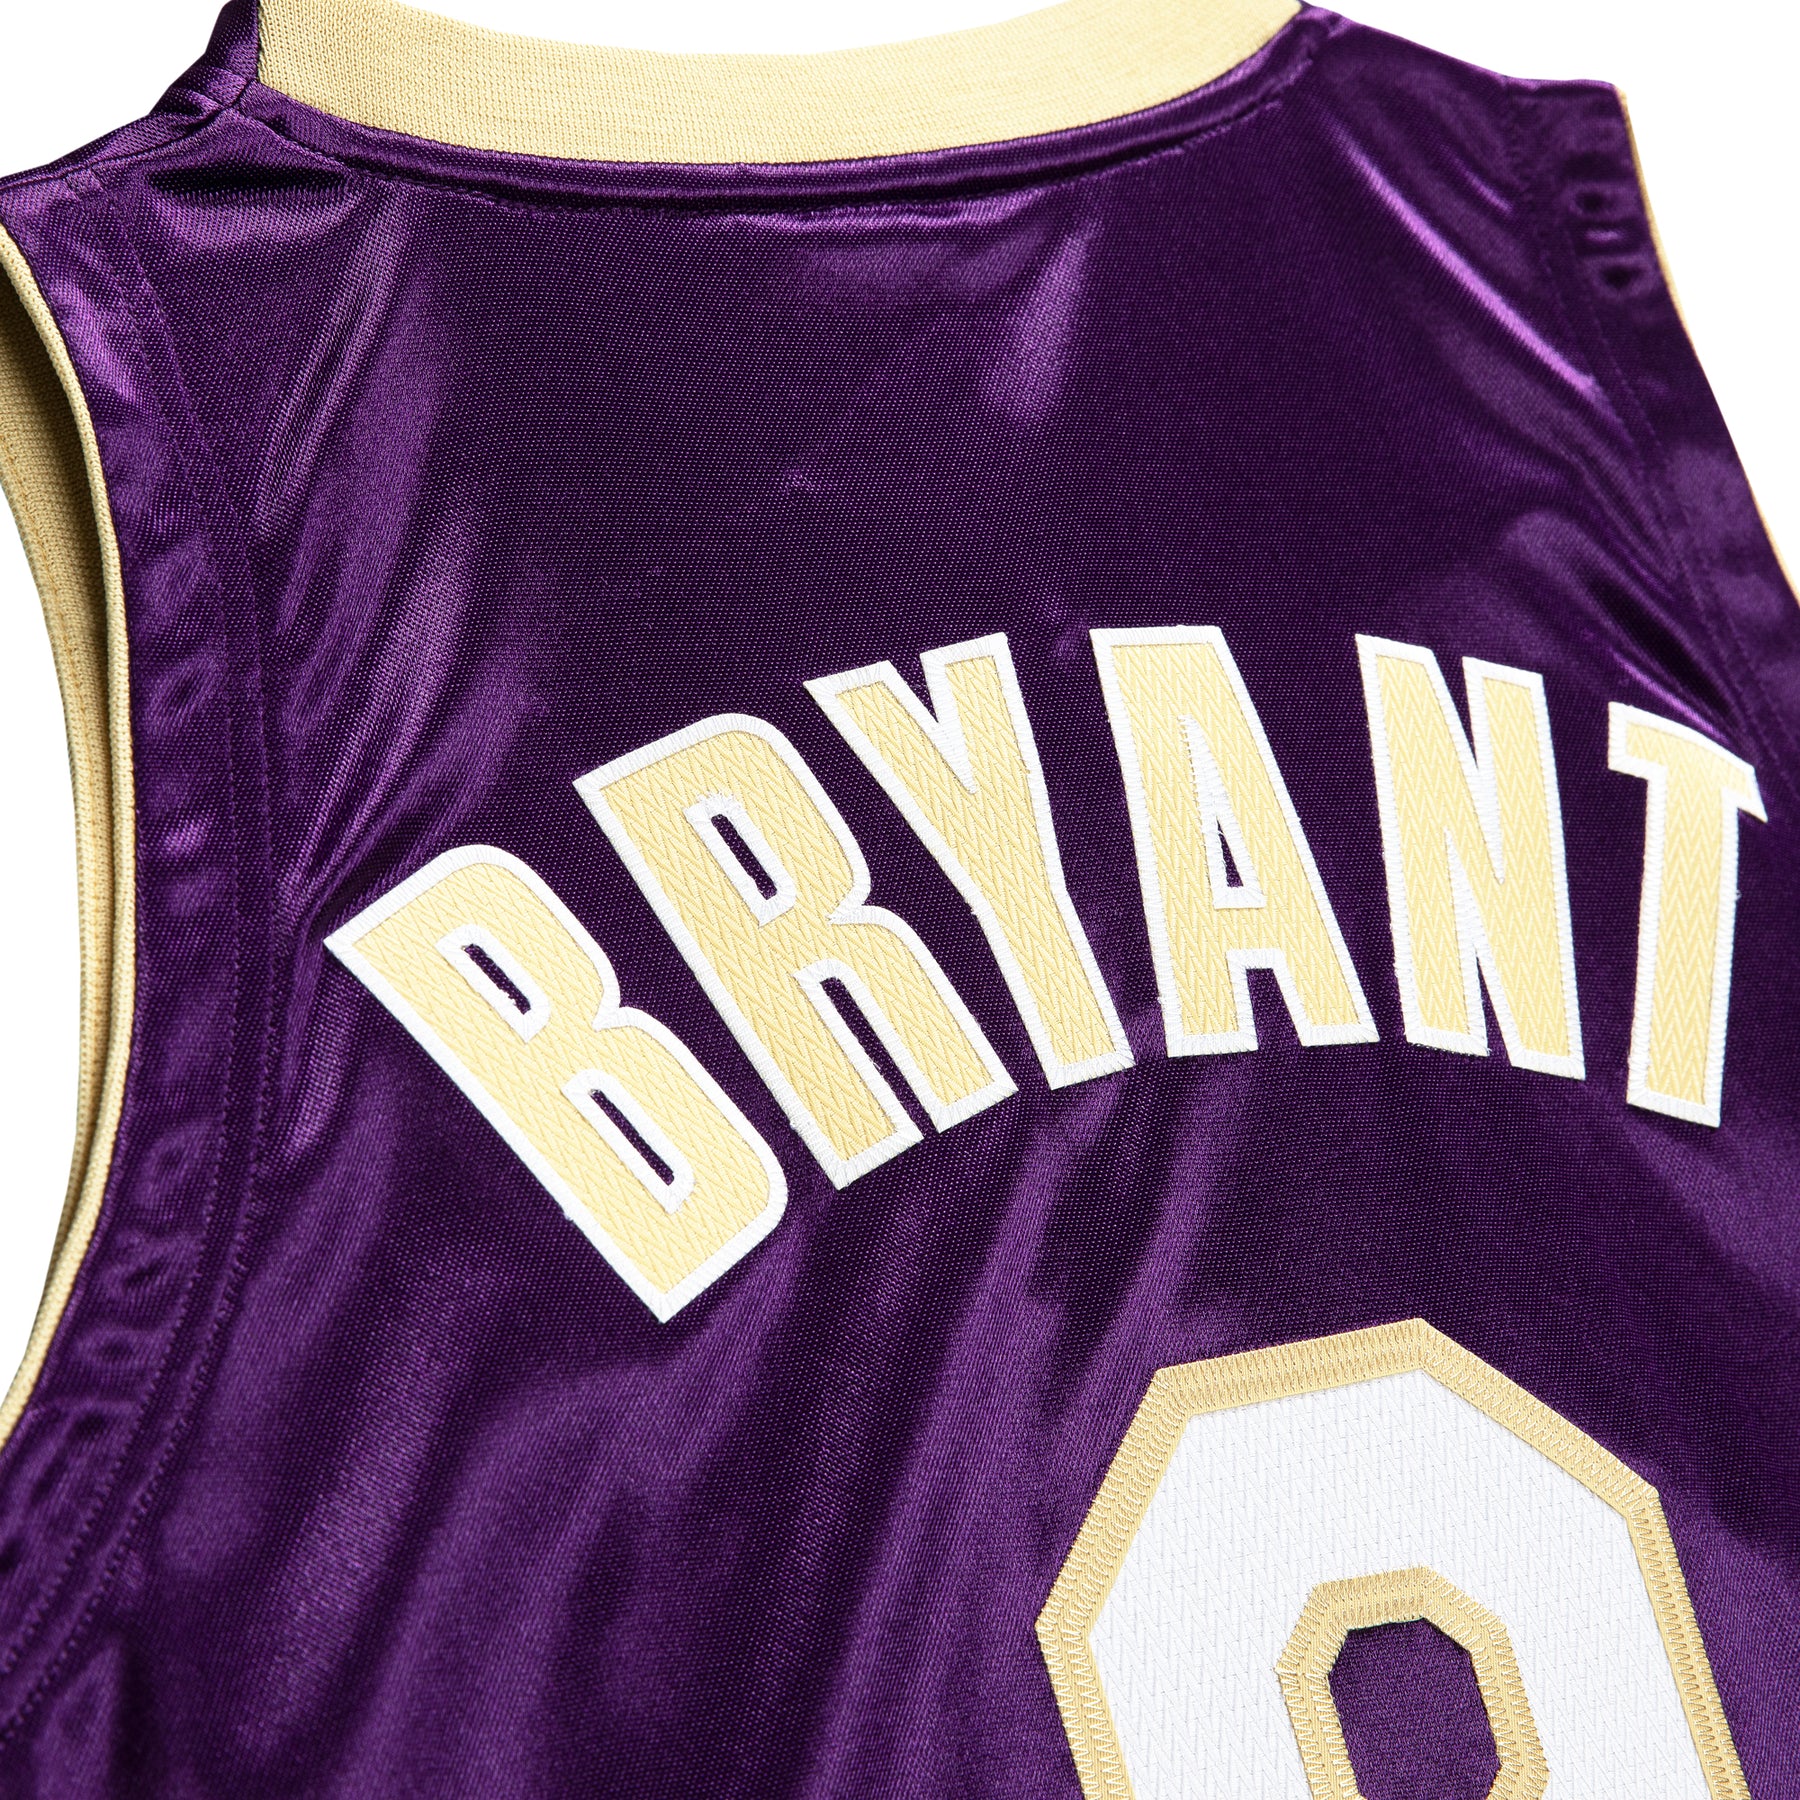 Kobe Bryant 8 Jersey 